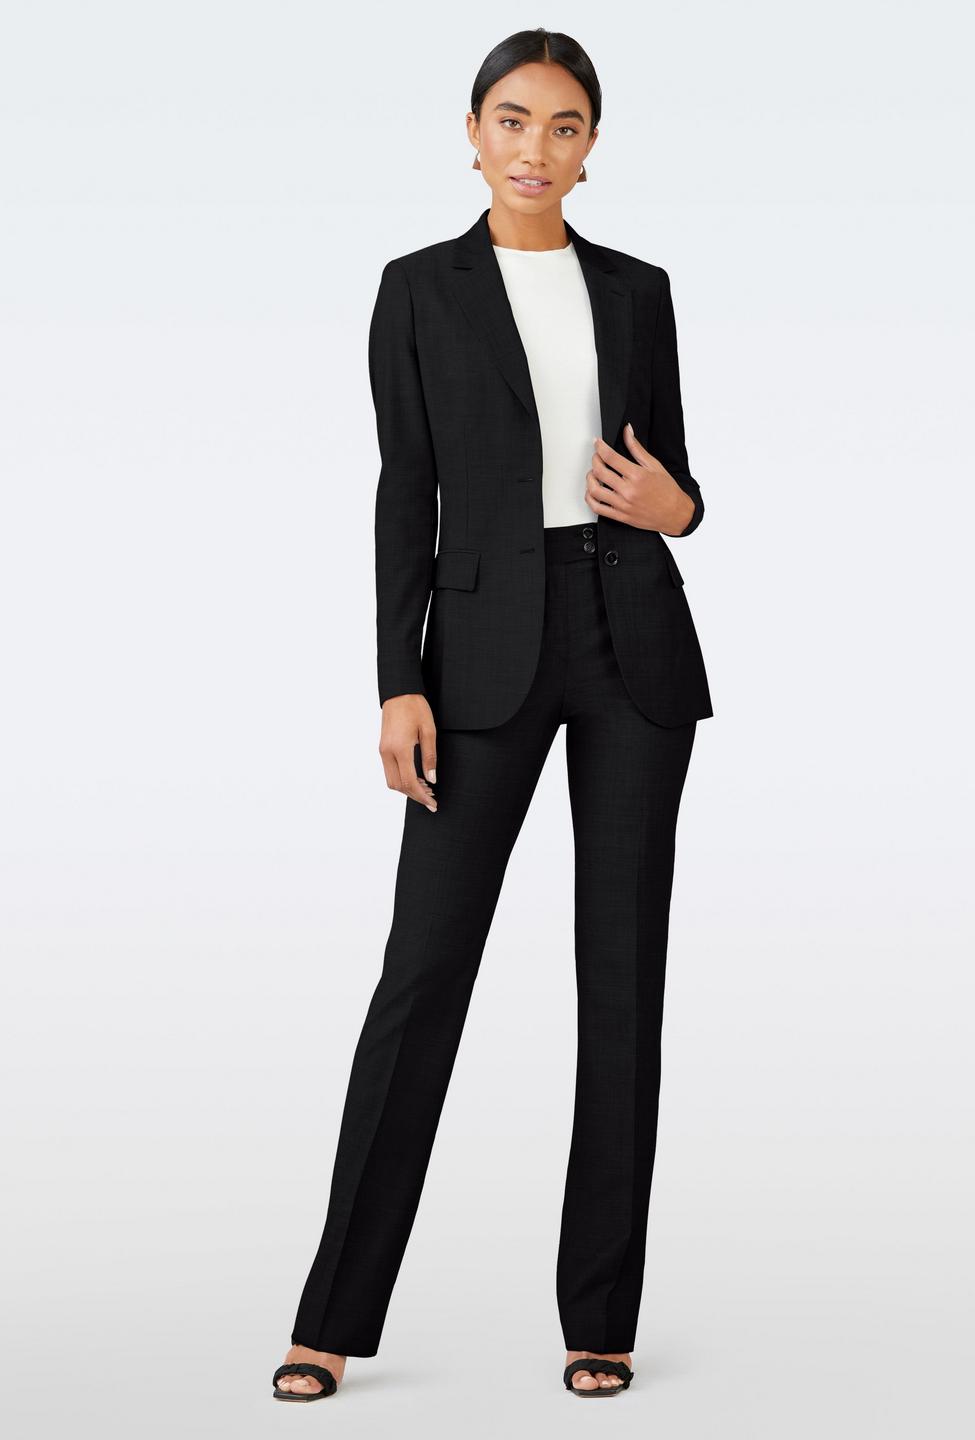 Black blazer women - Solid Design from Luxury Indochino Collection